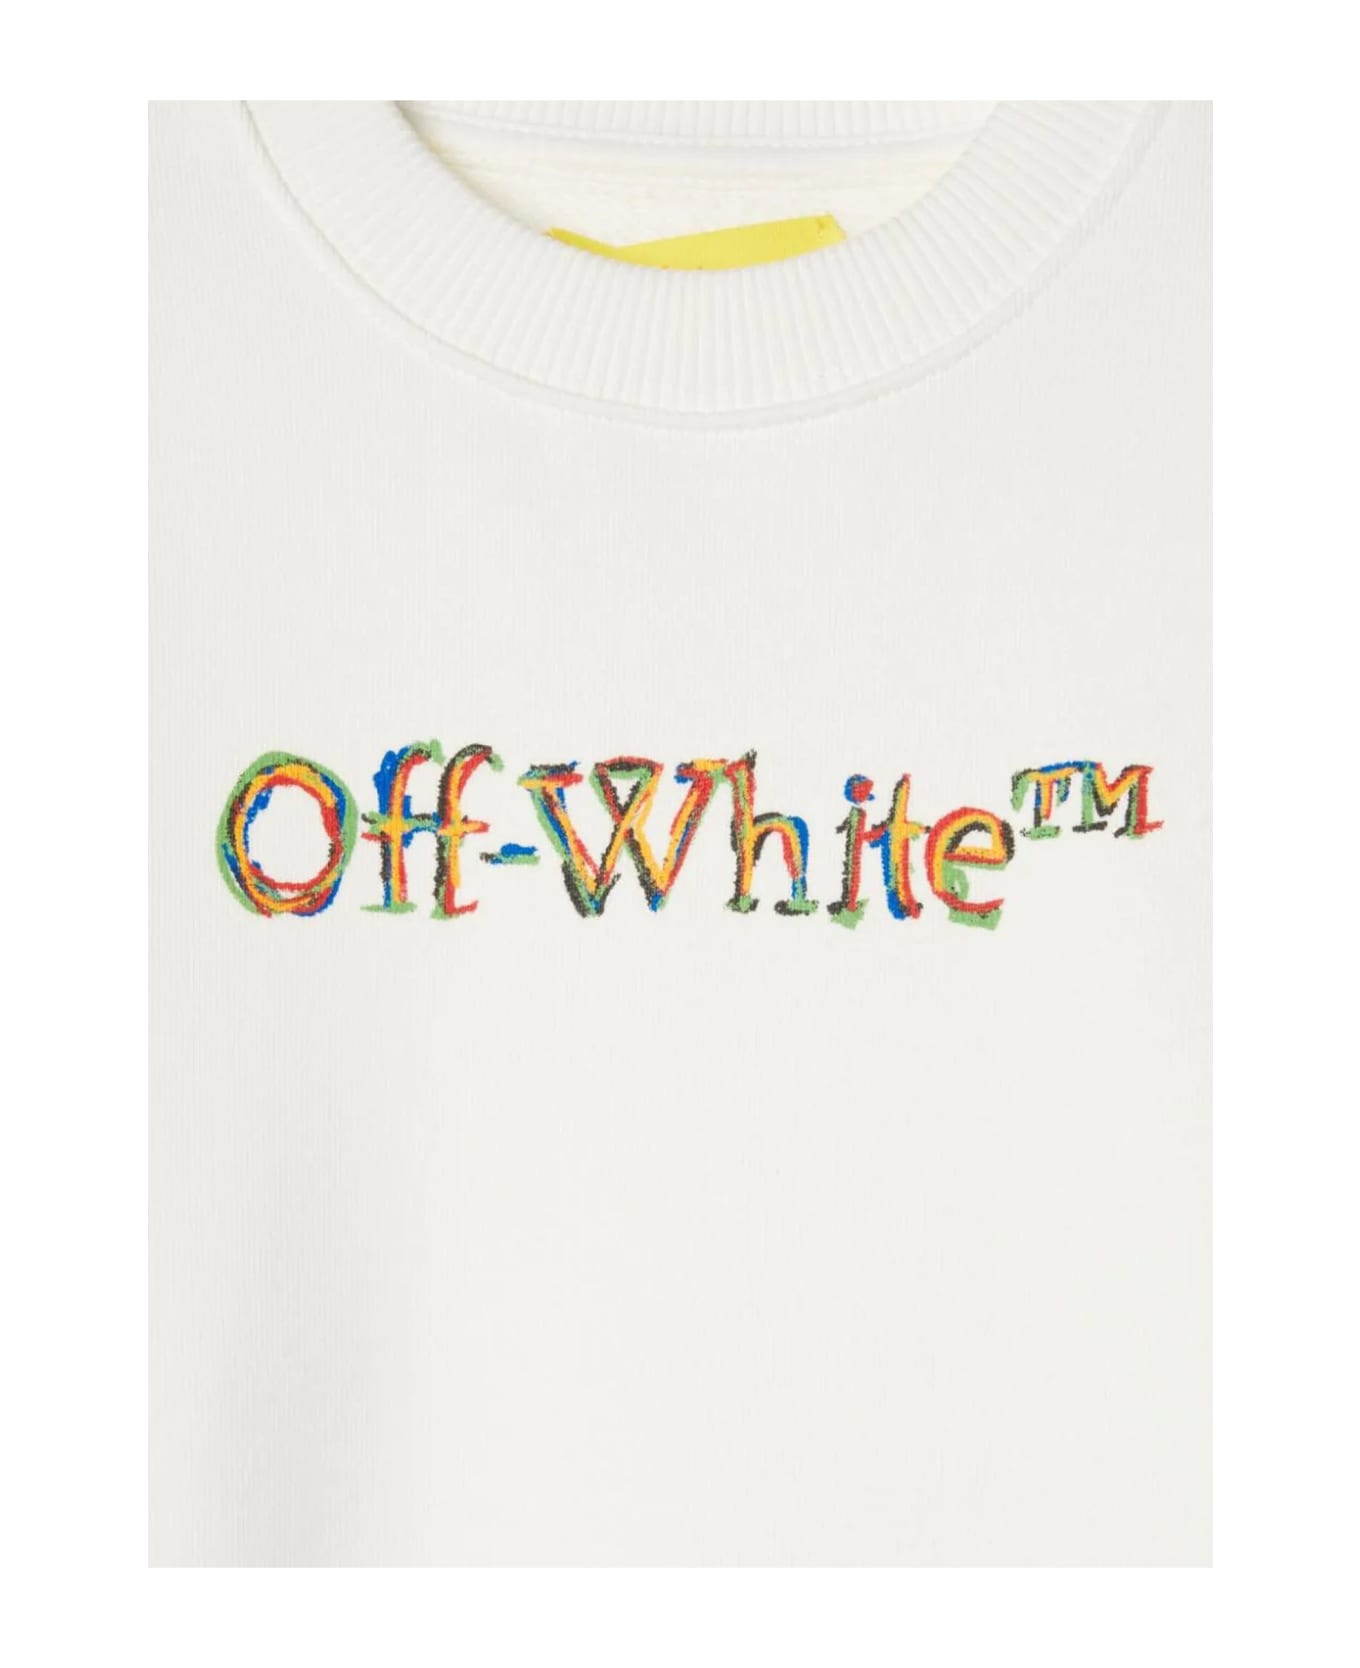 Off-White Off White Sweaters White - White